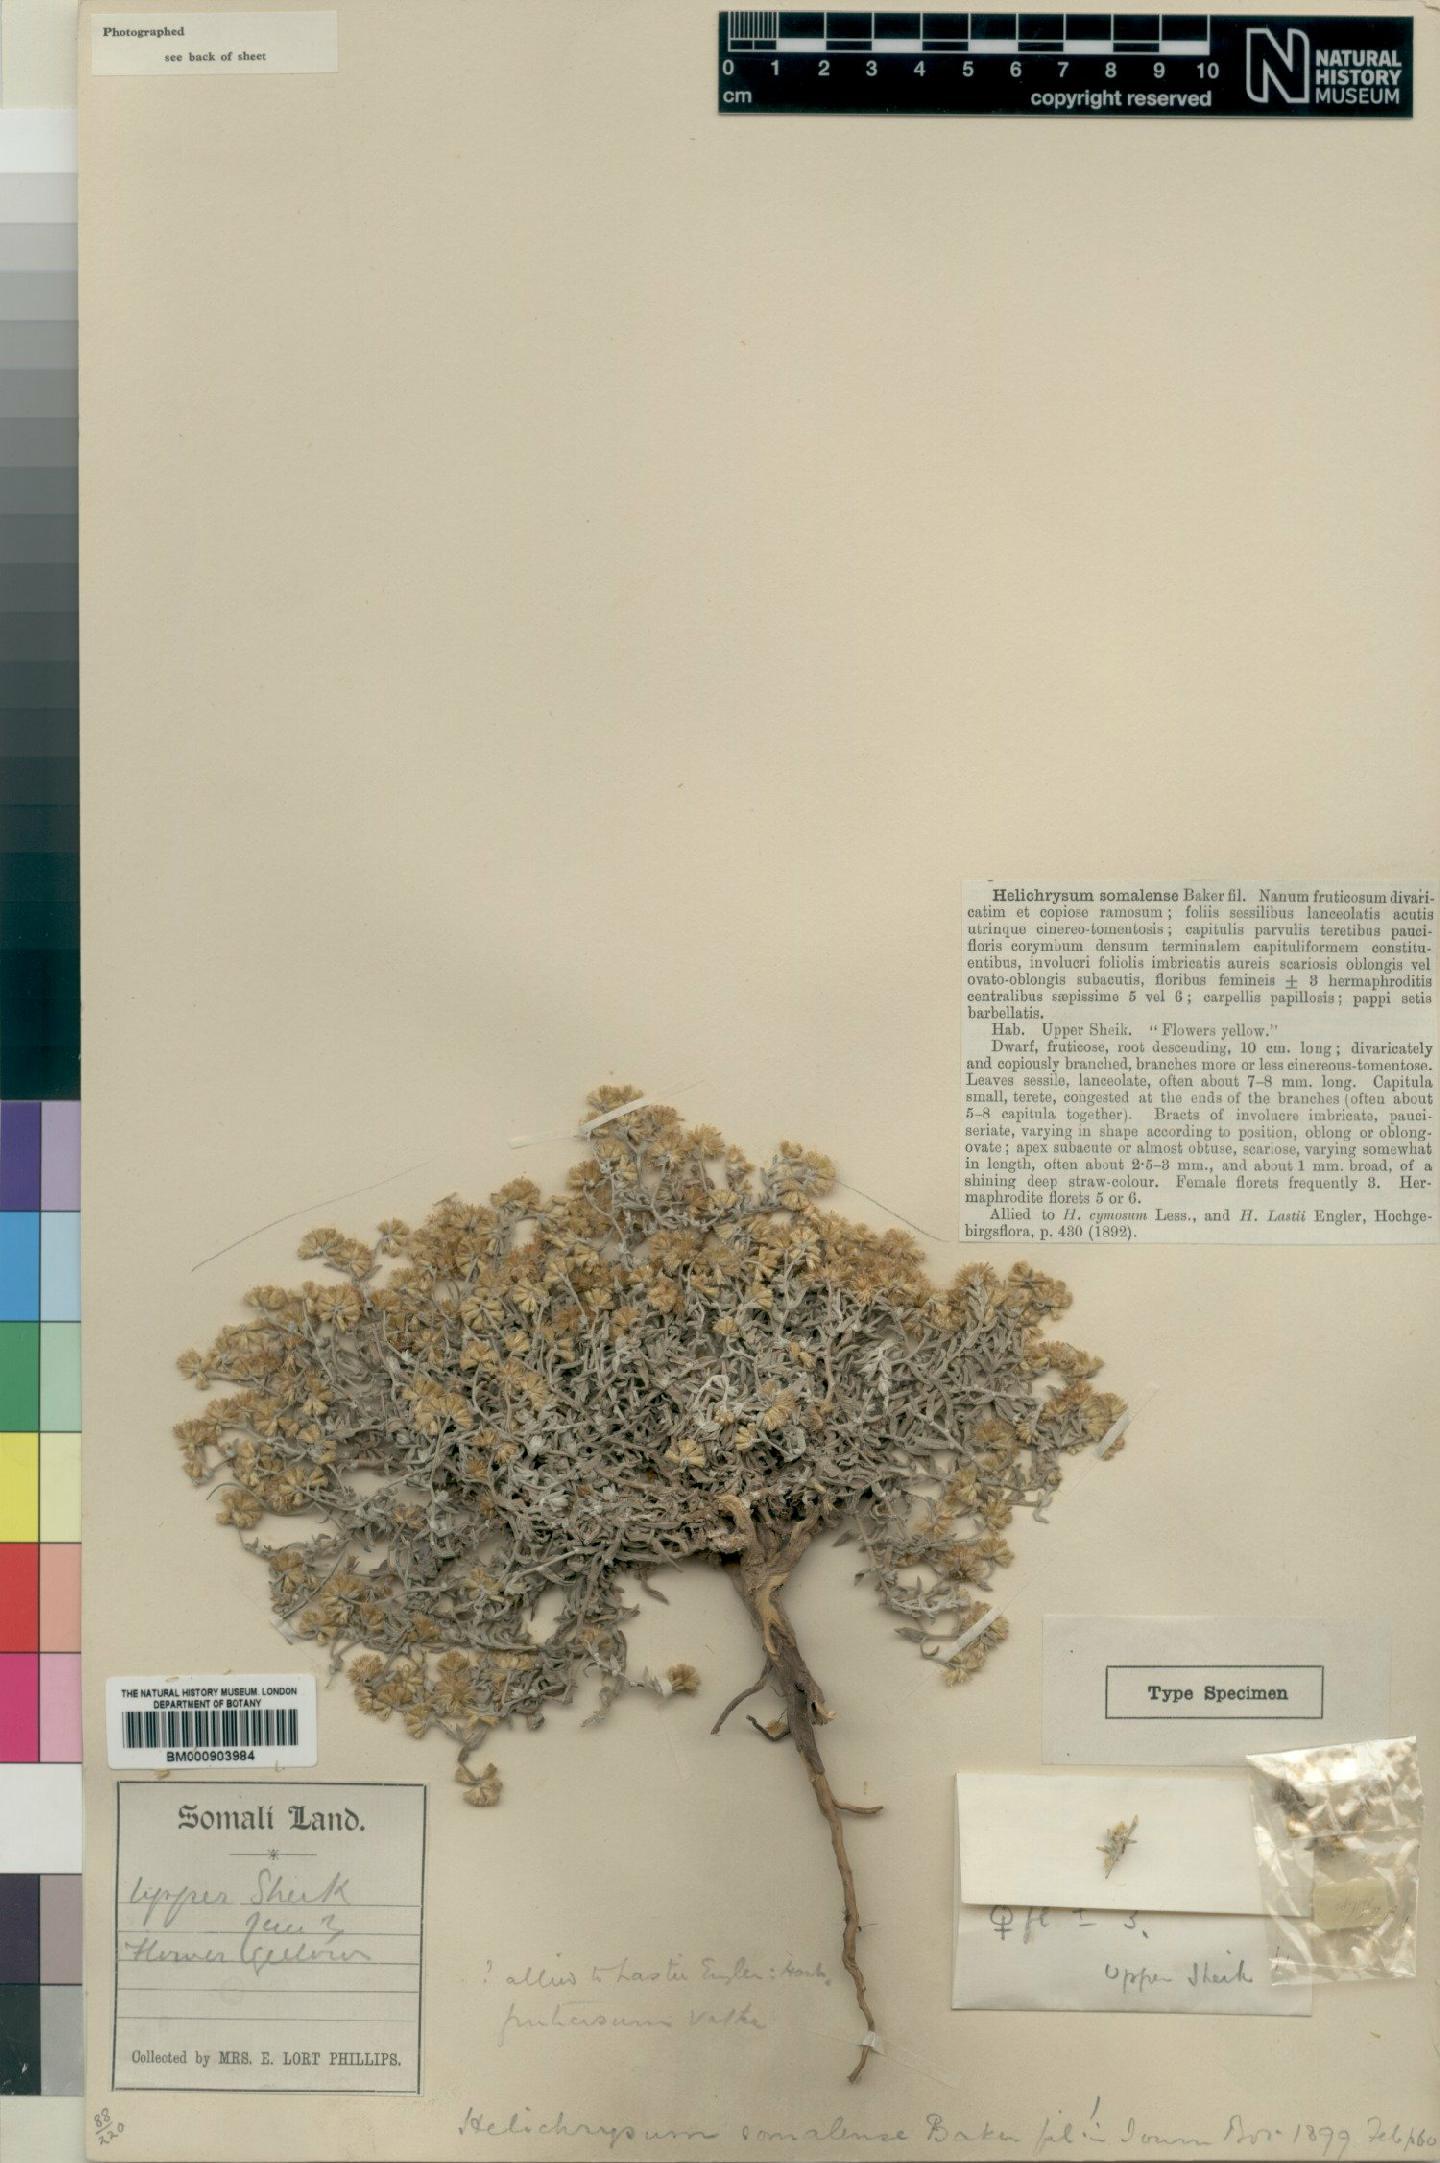 To NHMUK collection (Helichrysum somalense Baker f.; Type; NHMUK:ecatalogue:4529033)